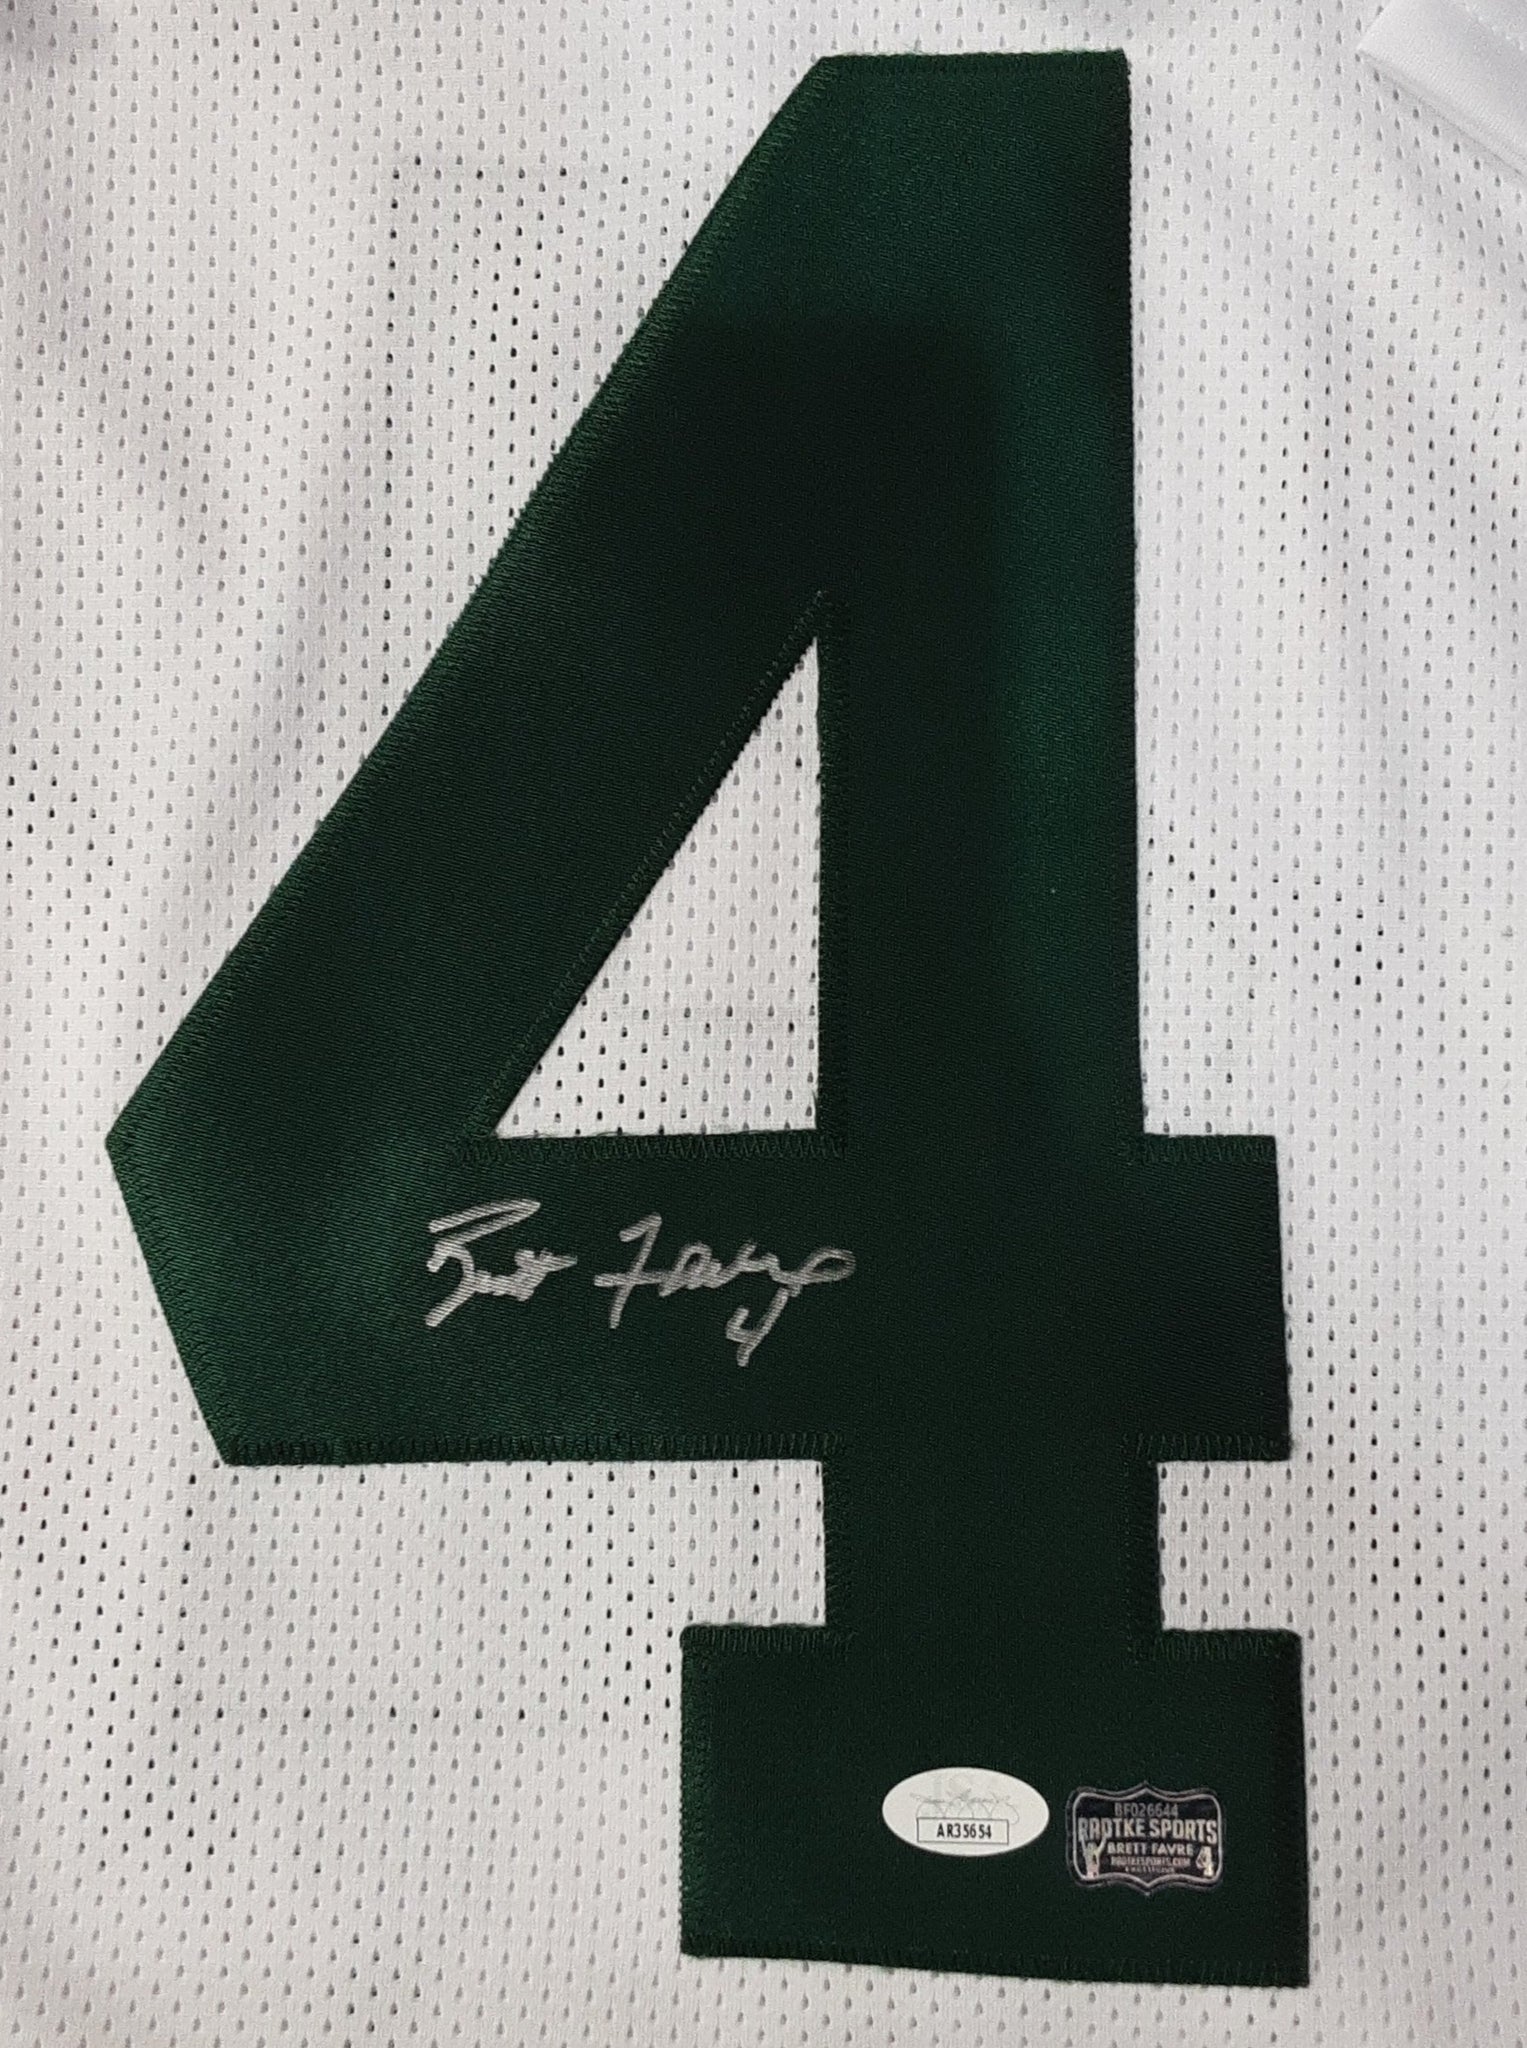 Brett Favre Authentic Signed Pro Style Jersey Autographed JSA-